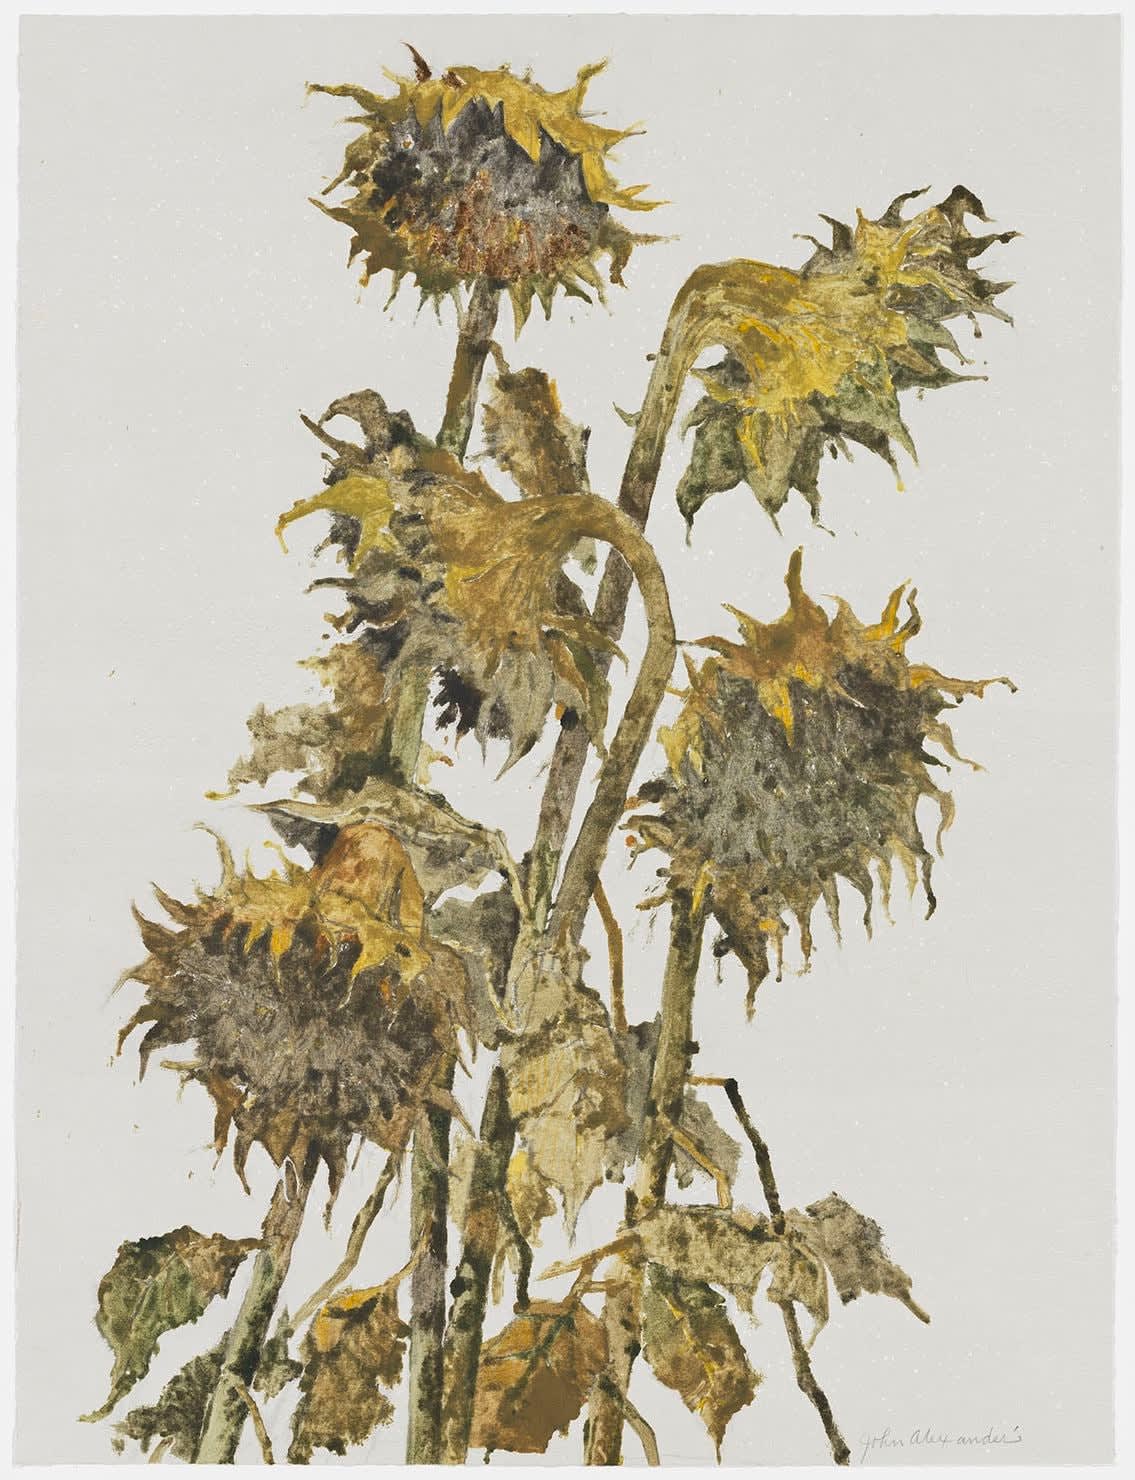 John Alexander, Sunflowers in Autumn, 2012